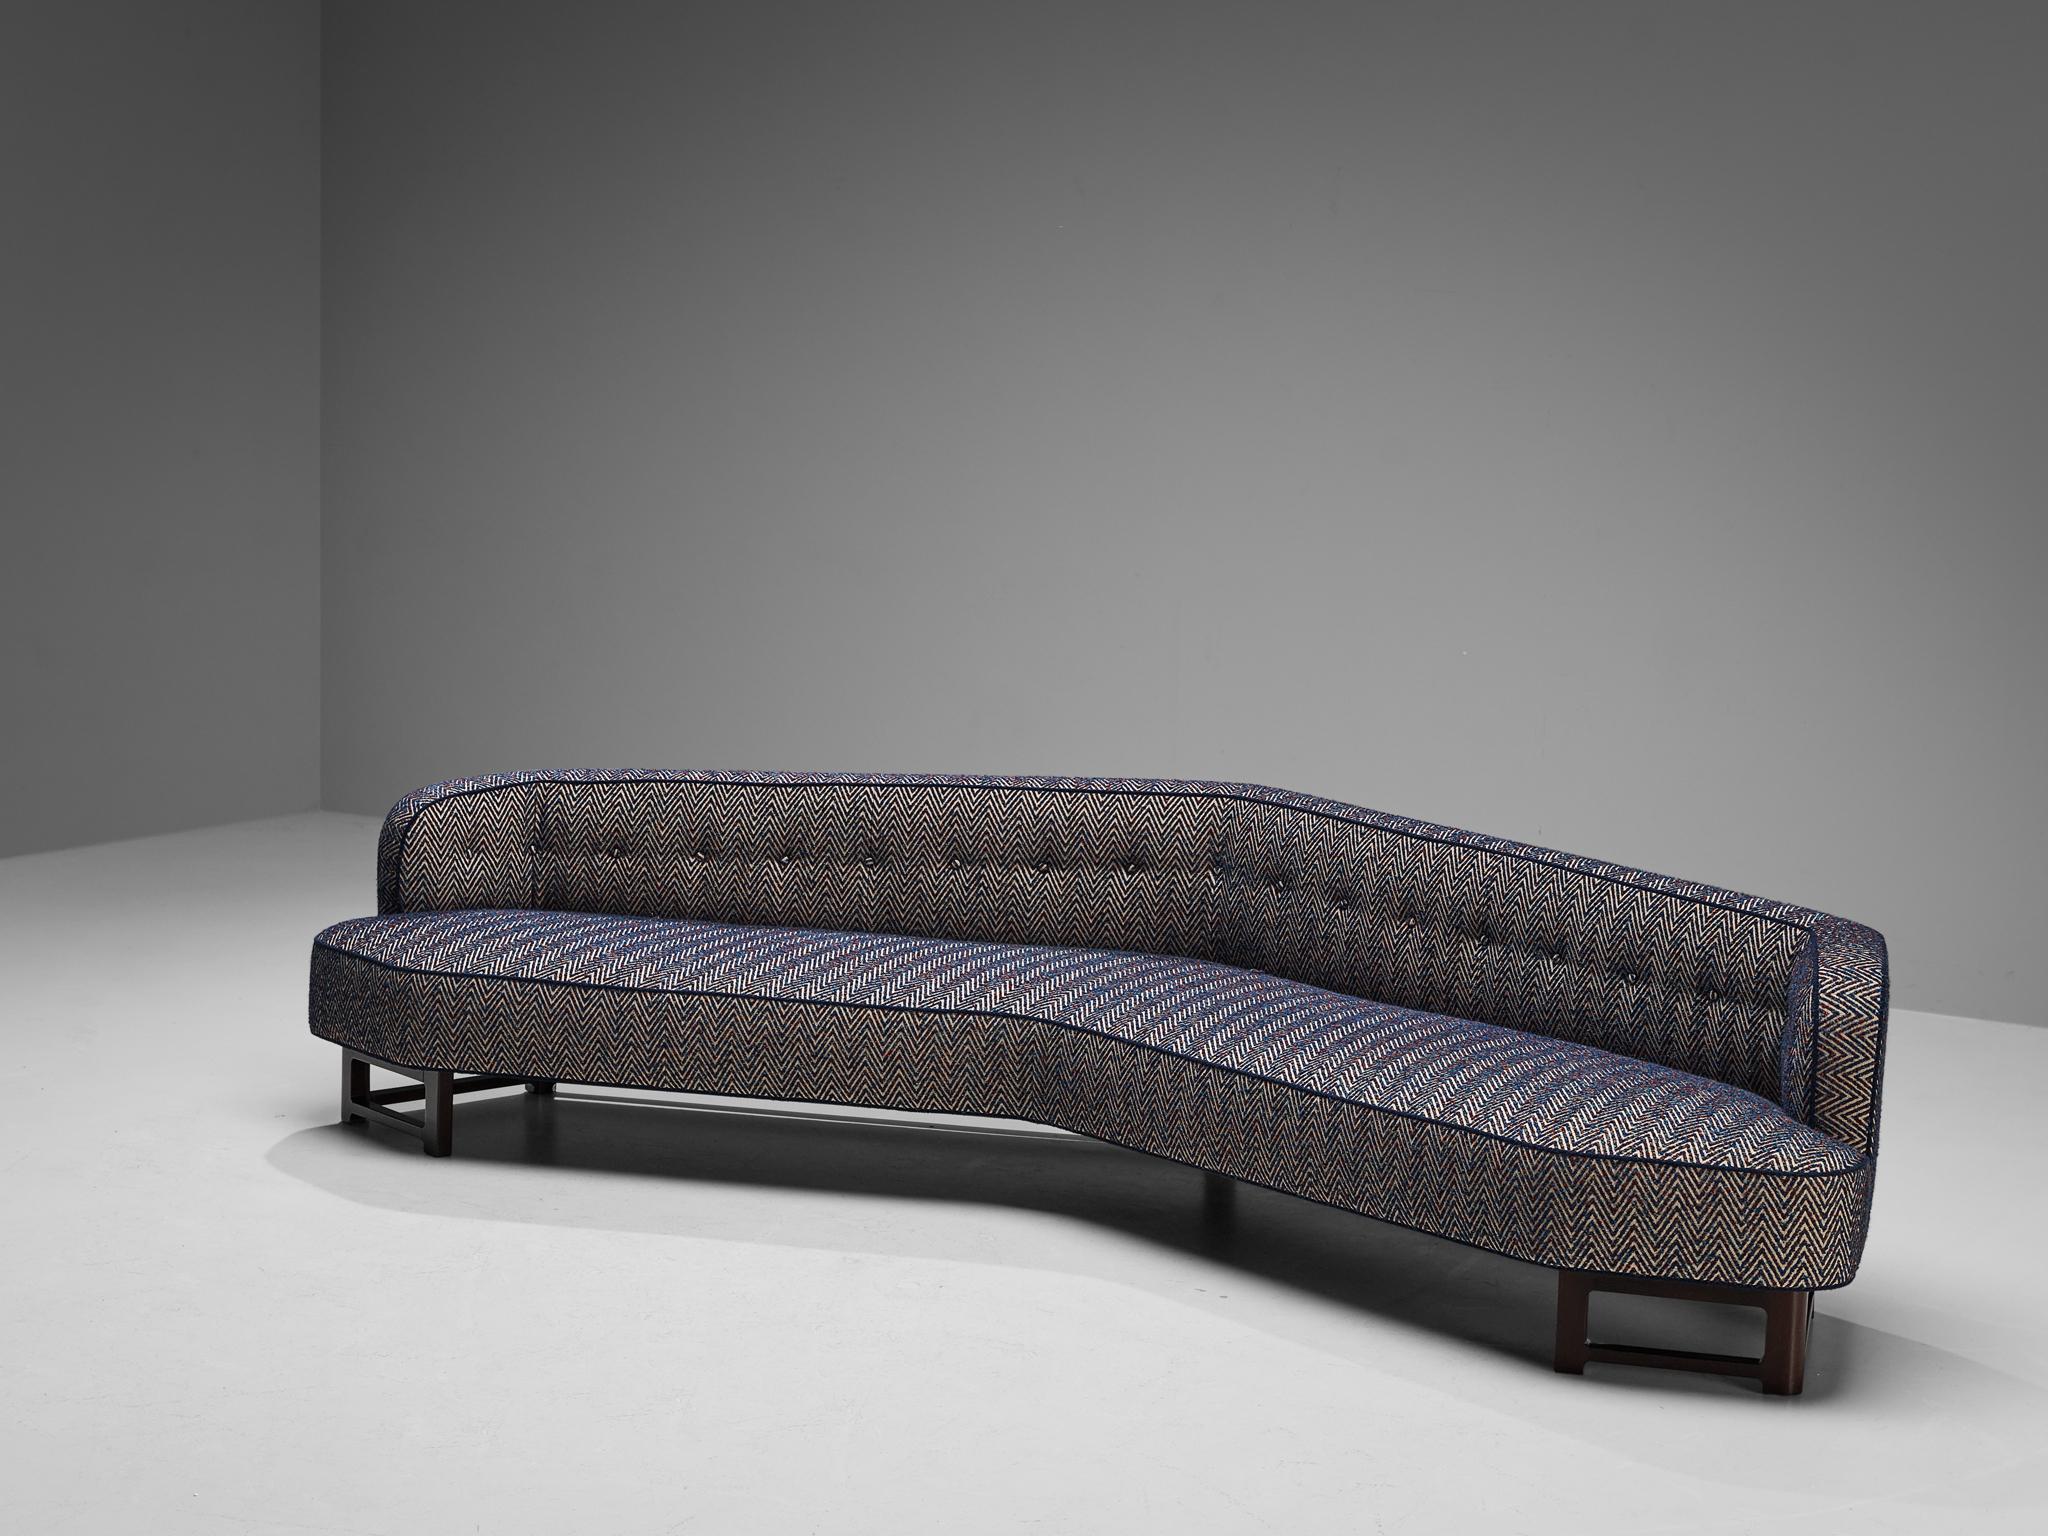 Edward Wormley Custom-Made 'Janus' Sofa in Multicolored Patterned Fabric  2